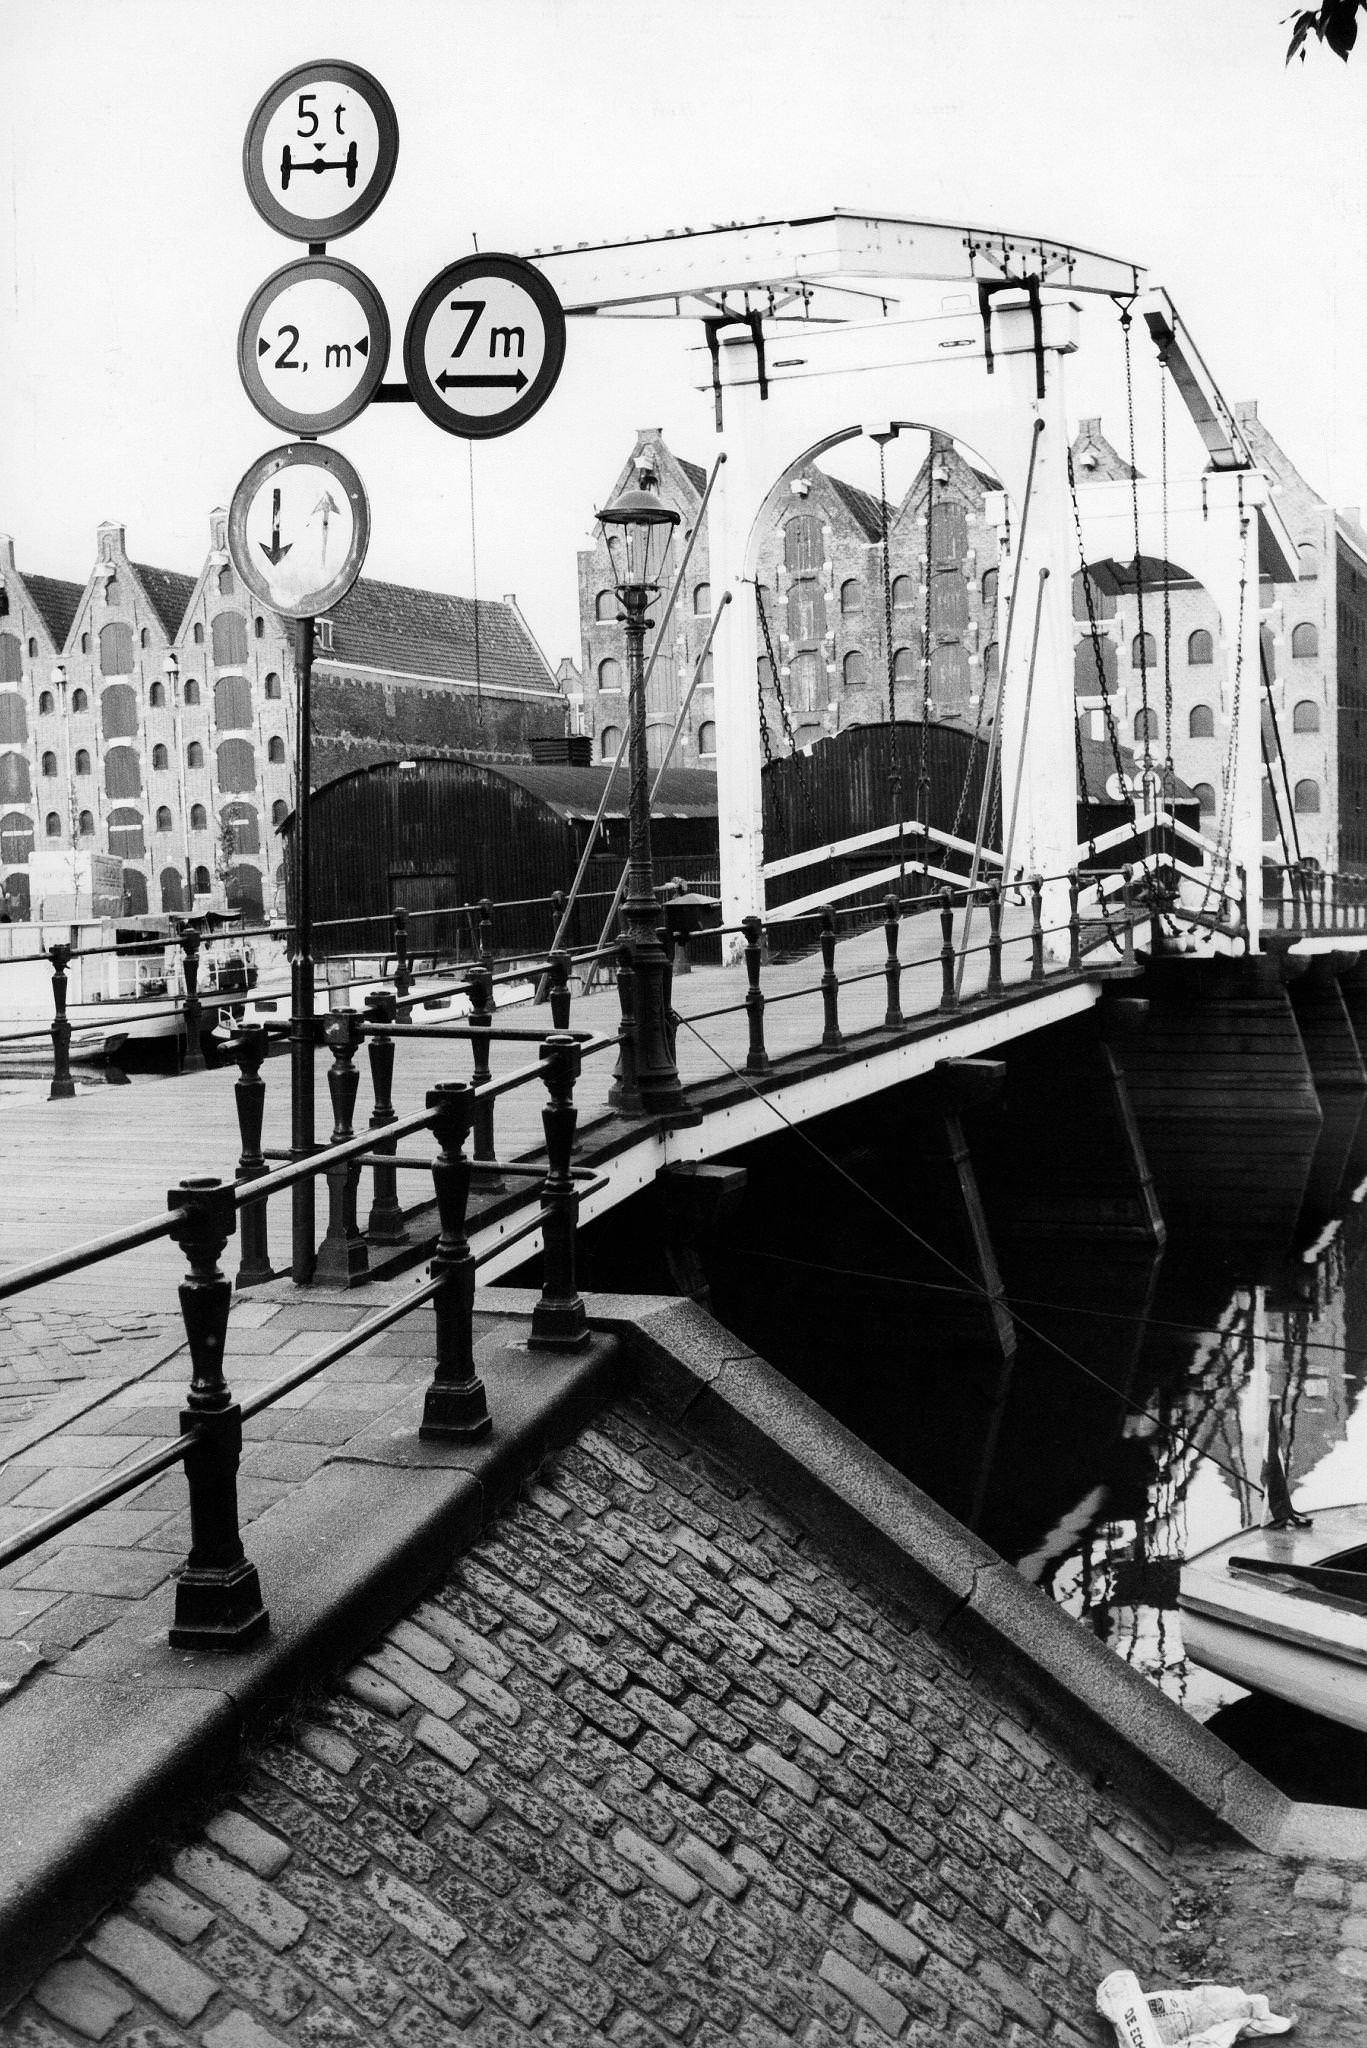 A drawbridge in Amsterdam, Netherlands - Photographer: Gerhard Ullmann, 1970